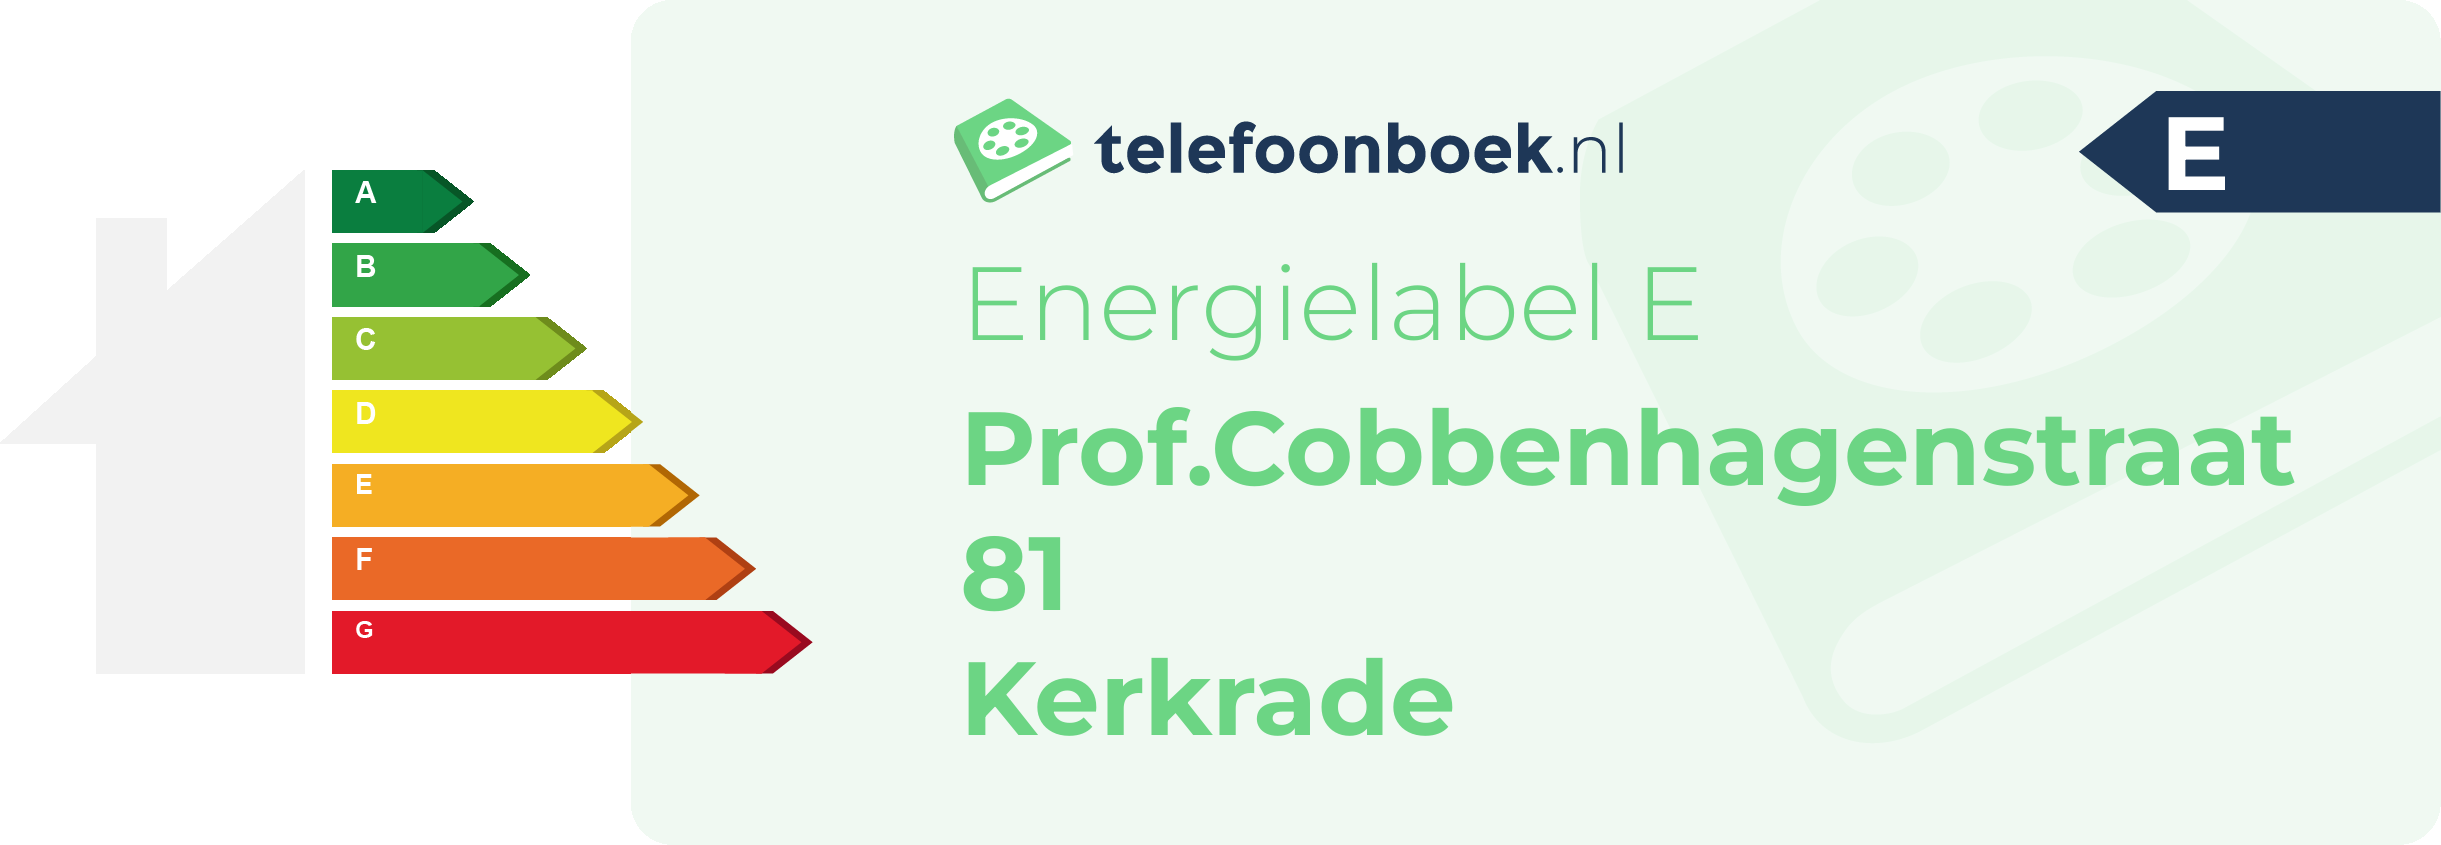 Energielabel Prof.Cobbenhagenstraat 81 Kerkrade